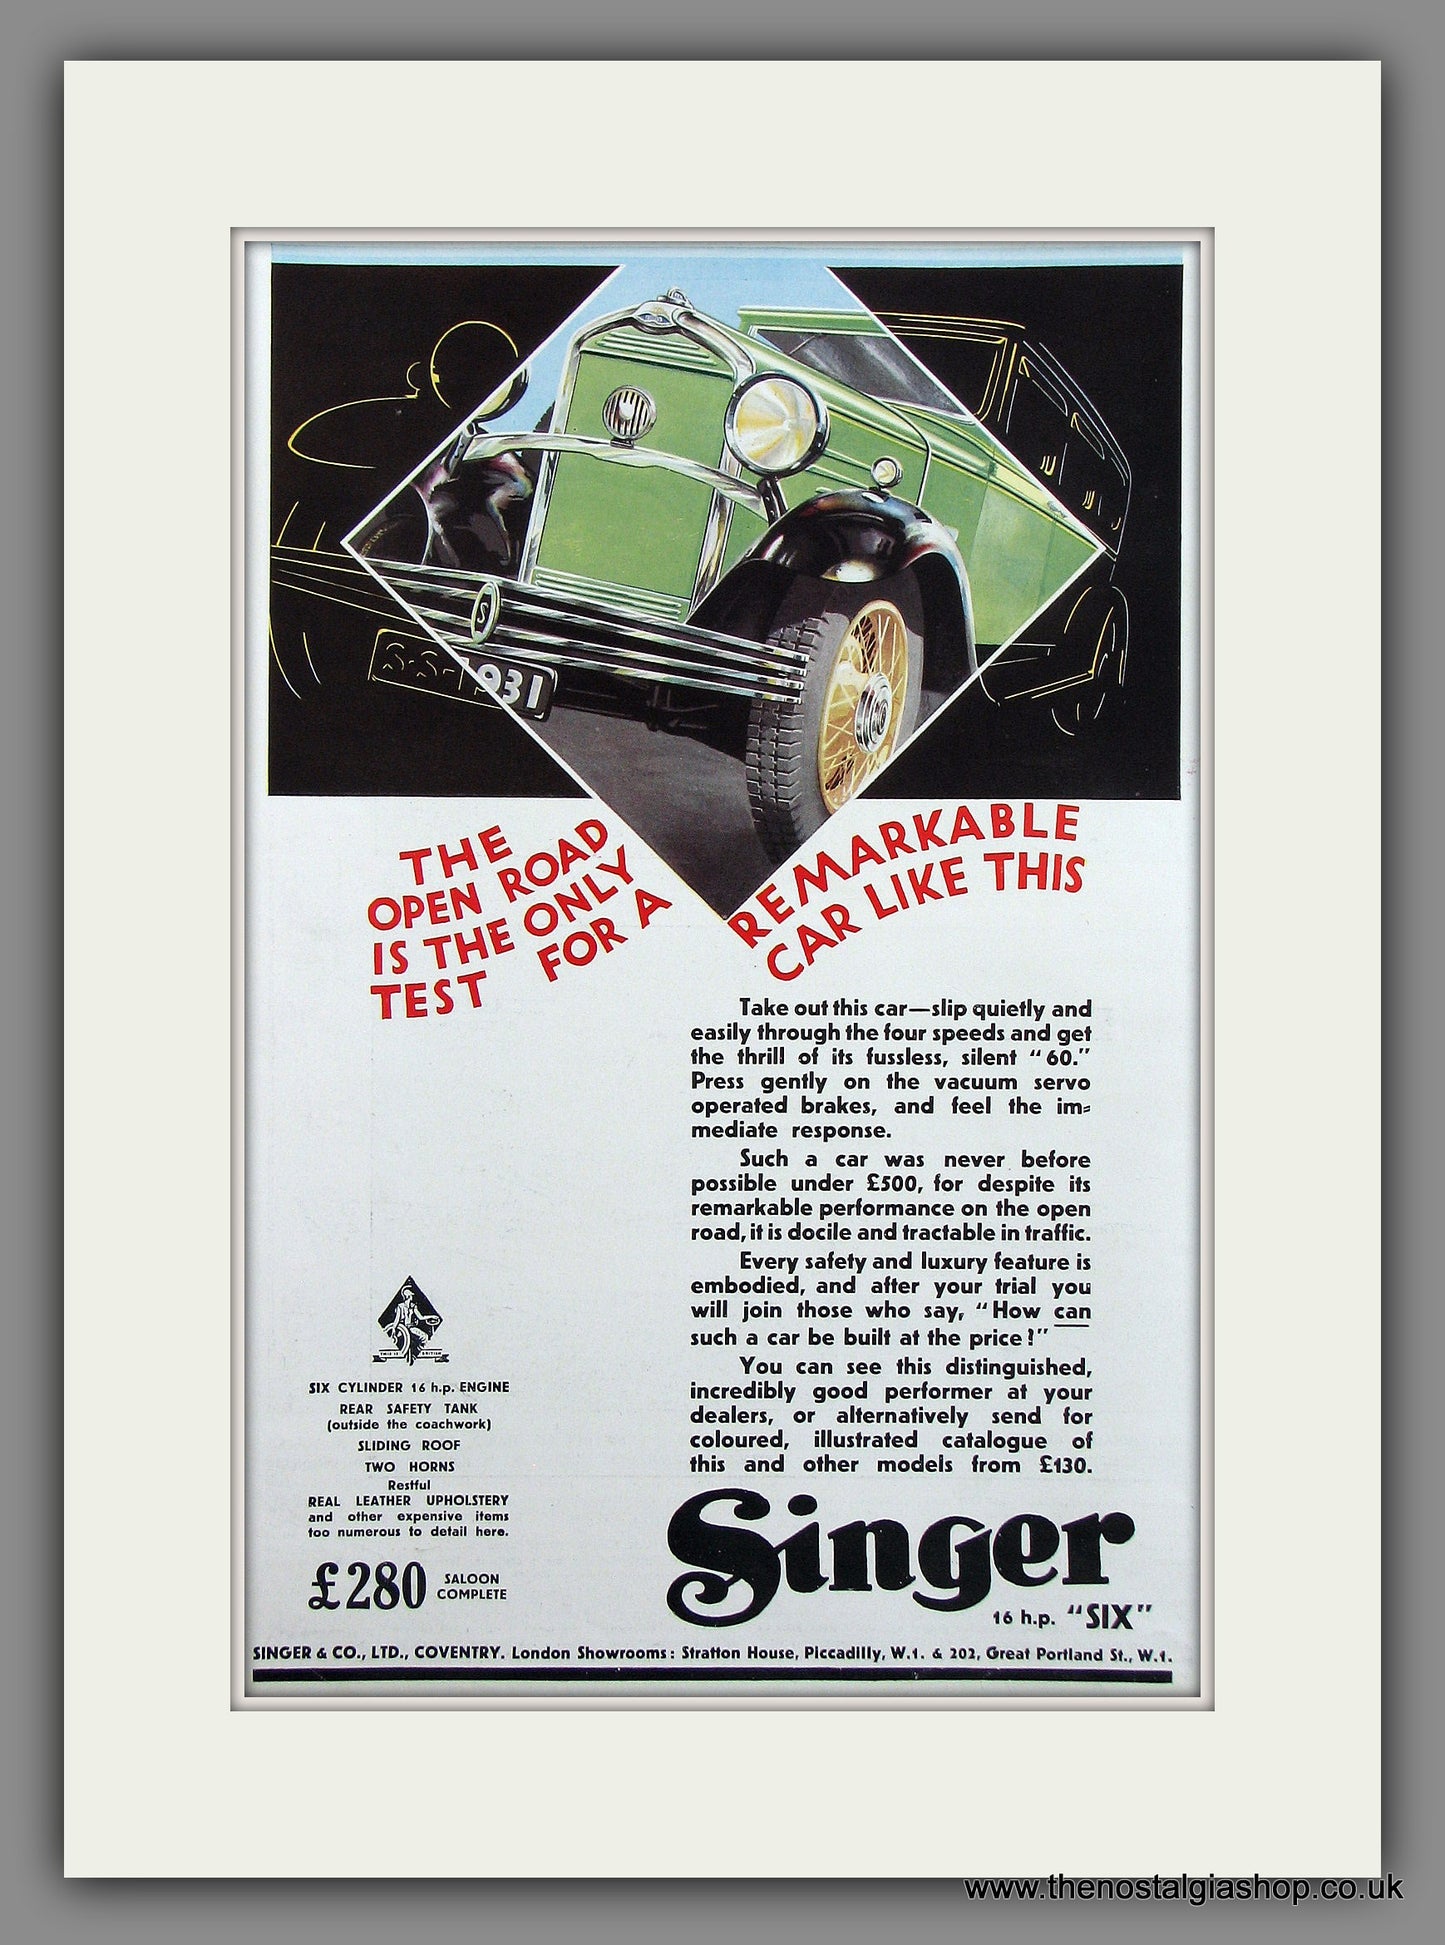 Singer "Six" 16 H.P. Original Advert 1931 (ref AD300004)